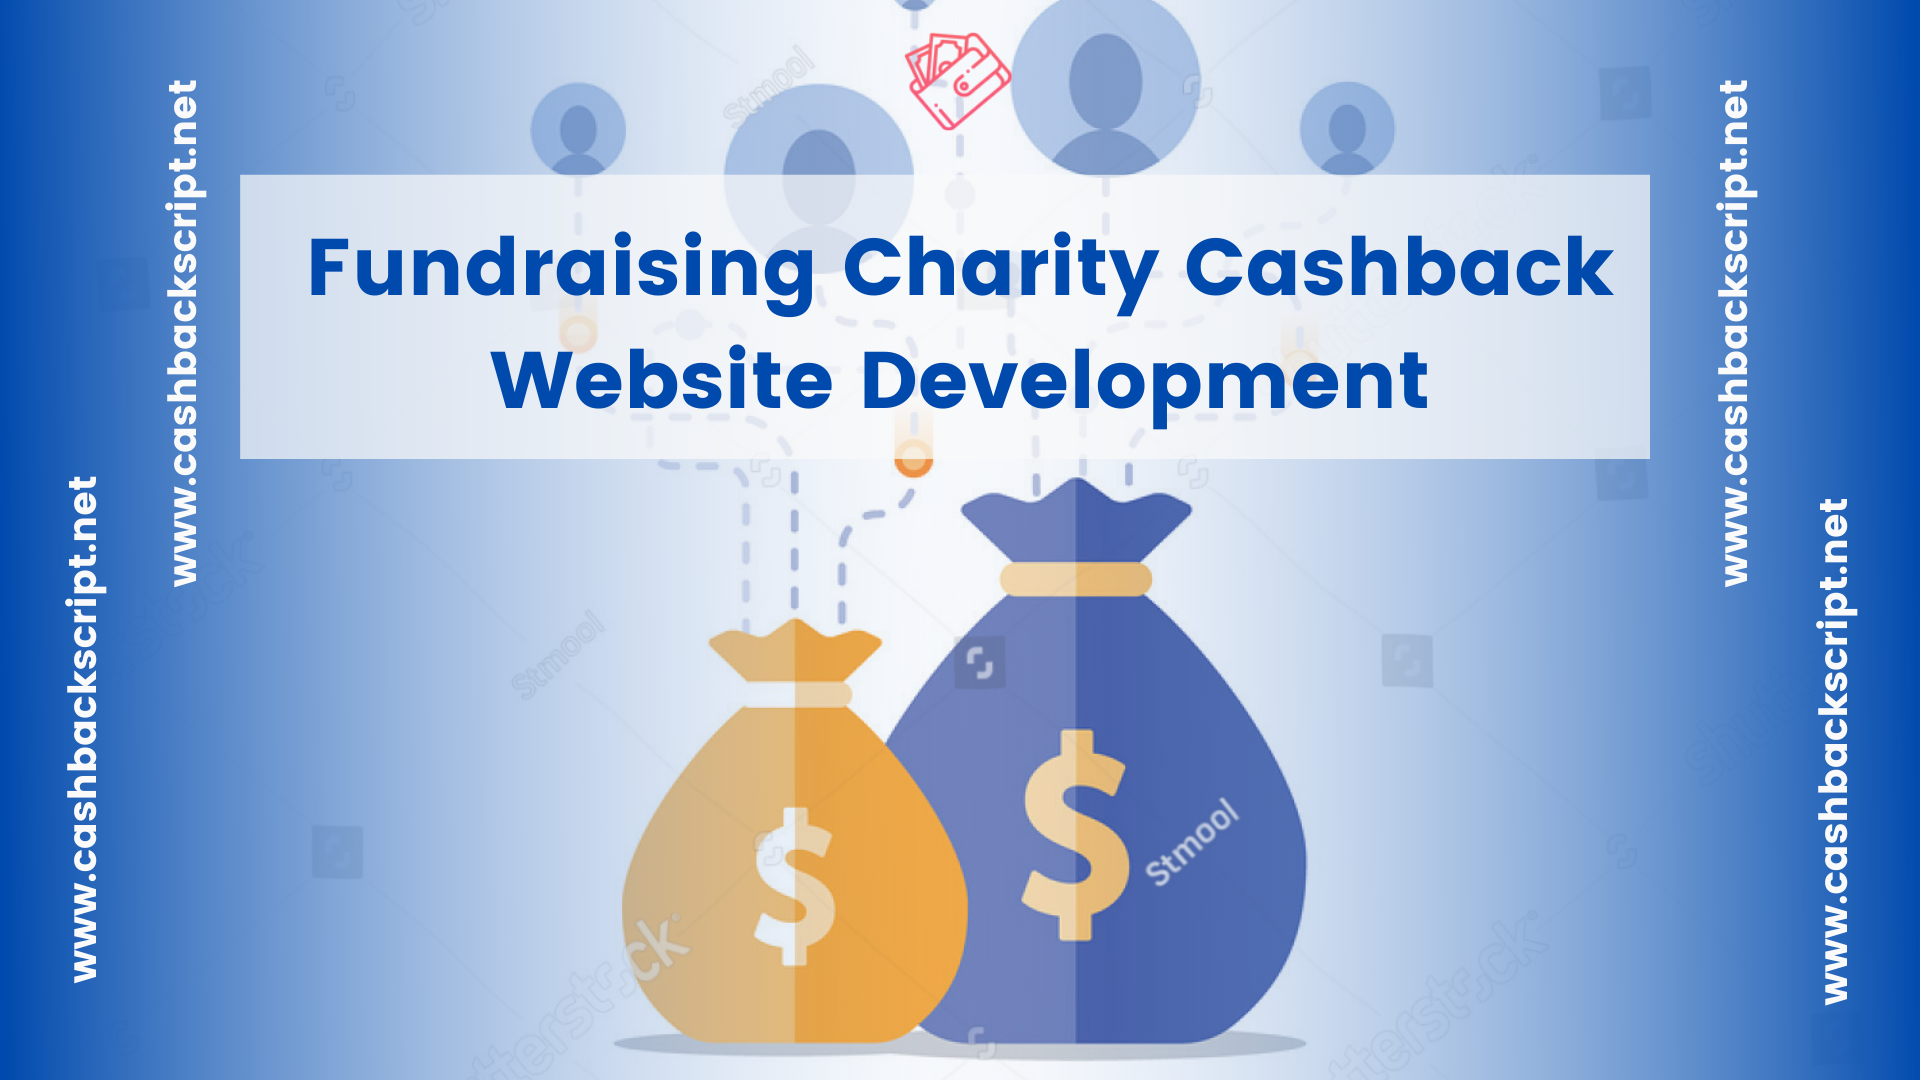 Fundraising Charity Cashback Website Development